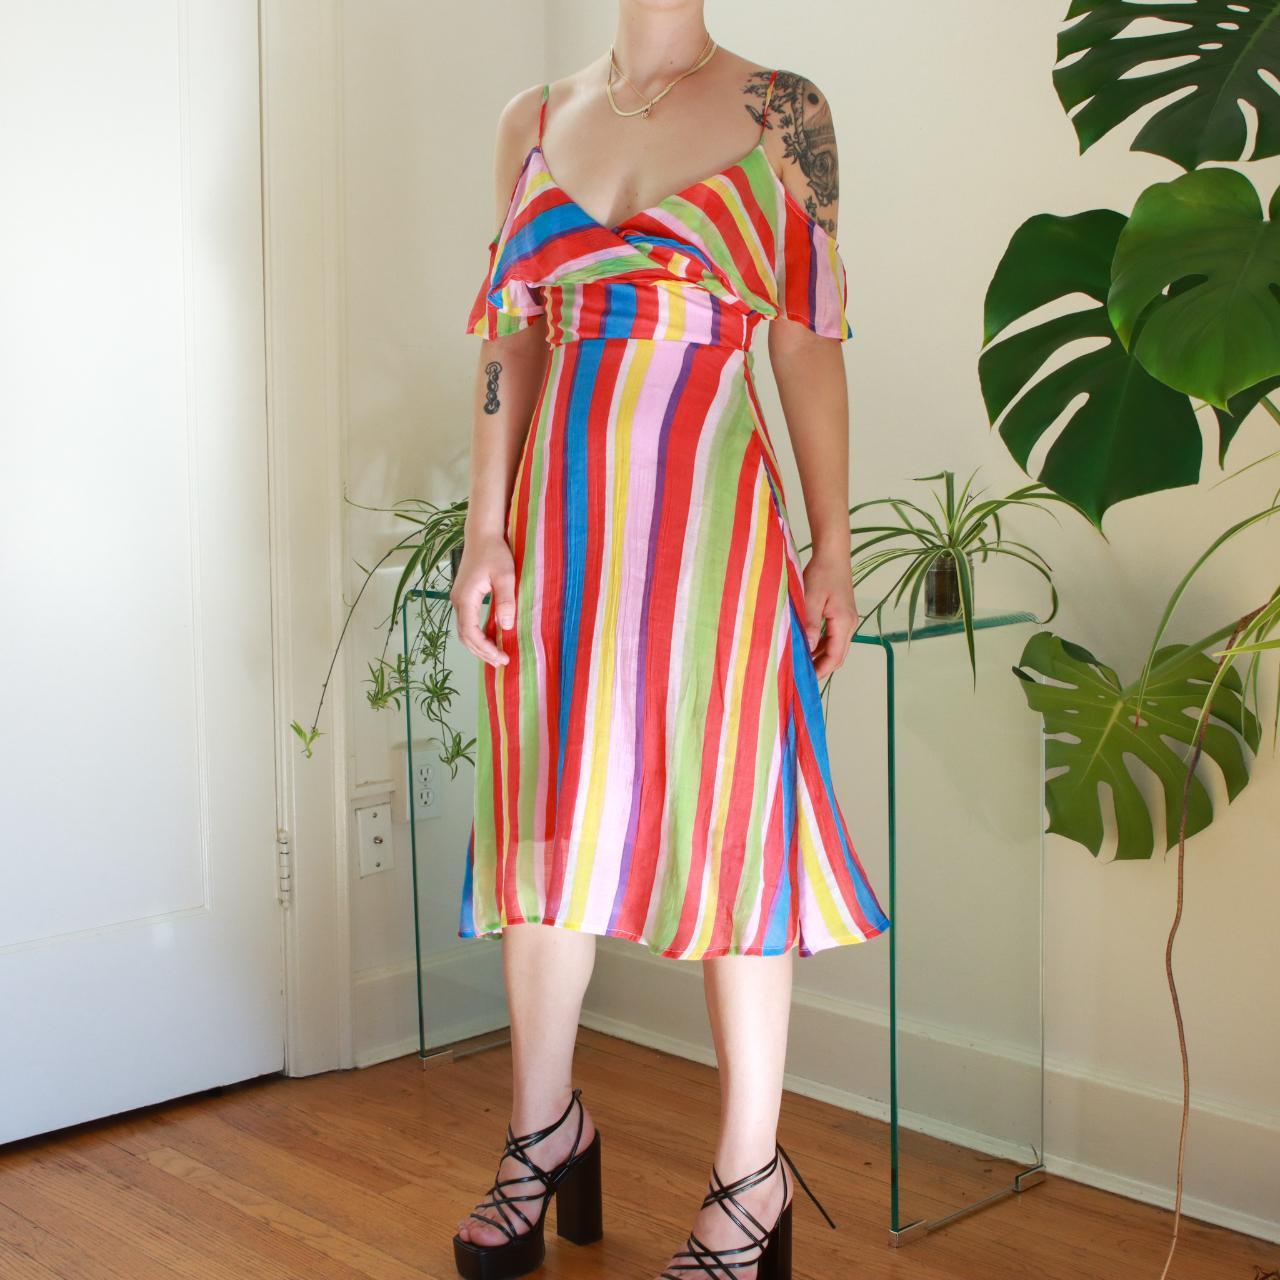 Product Image 4 - Rainbow striped midi dress. Spaghetti